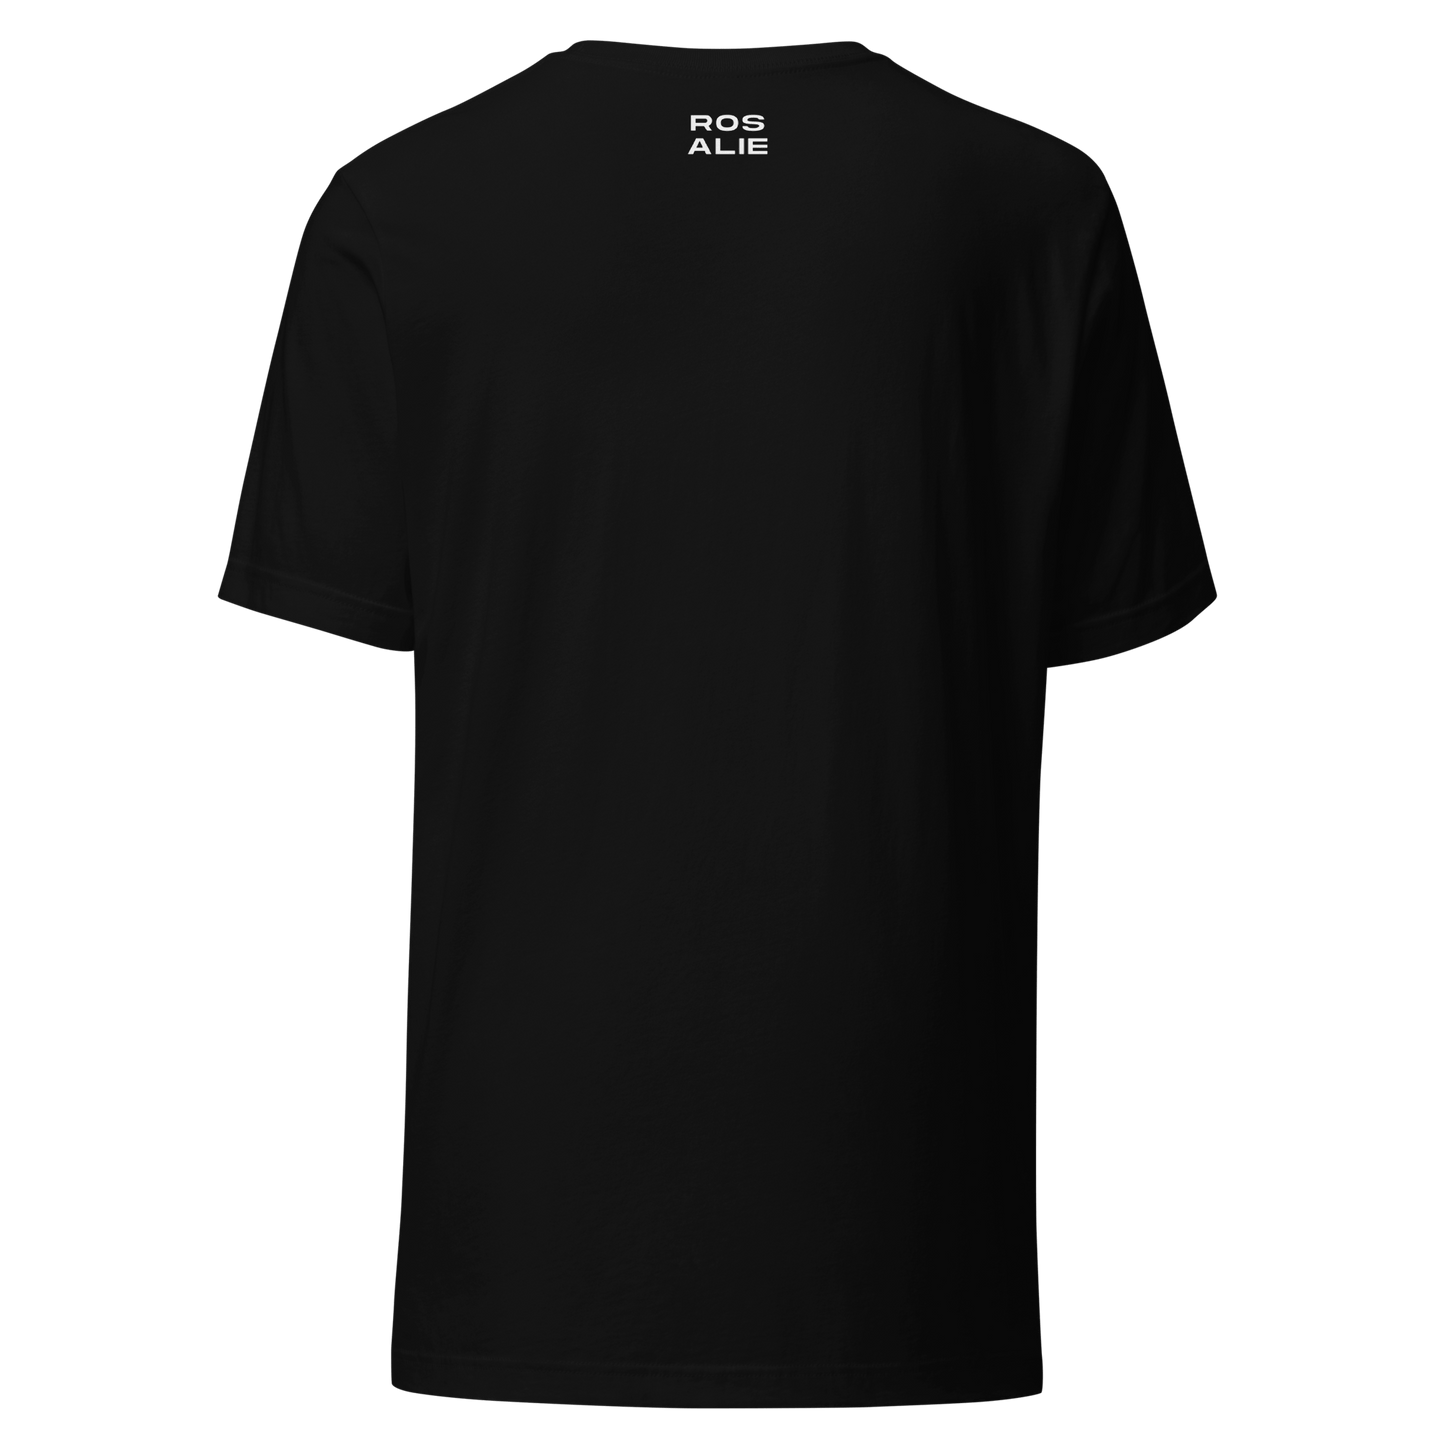 Make Your Own Magic T-Shirt - ROSALIE